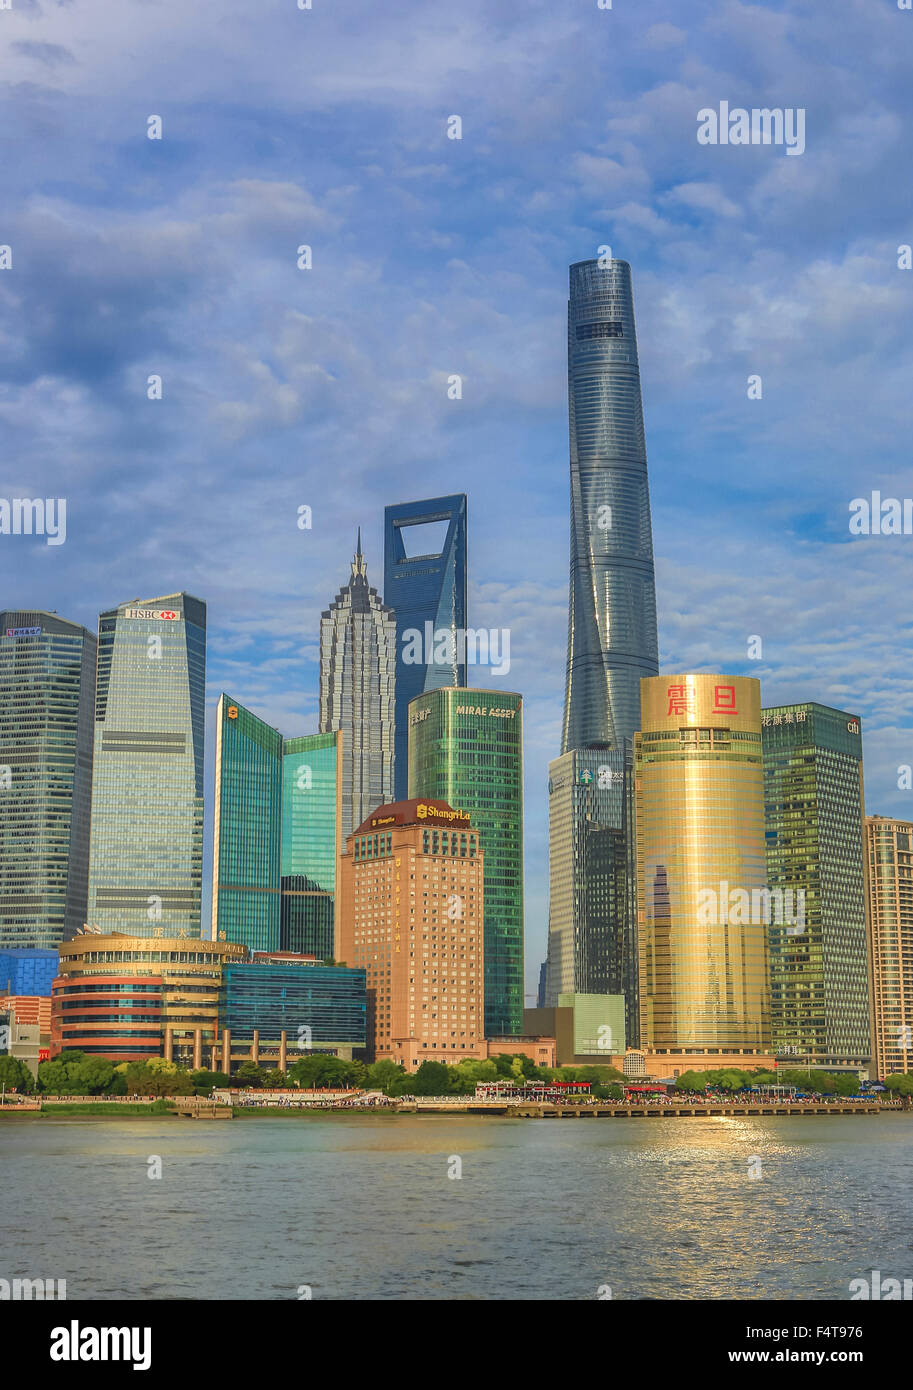 China, Shanghai City, The Bund and Pudong district skyline, Huangpu River Stock Photo